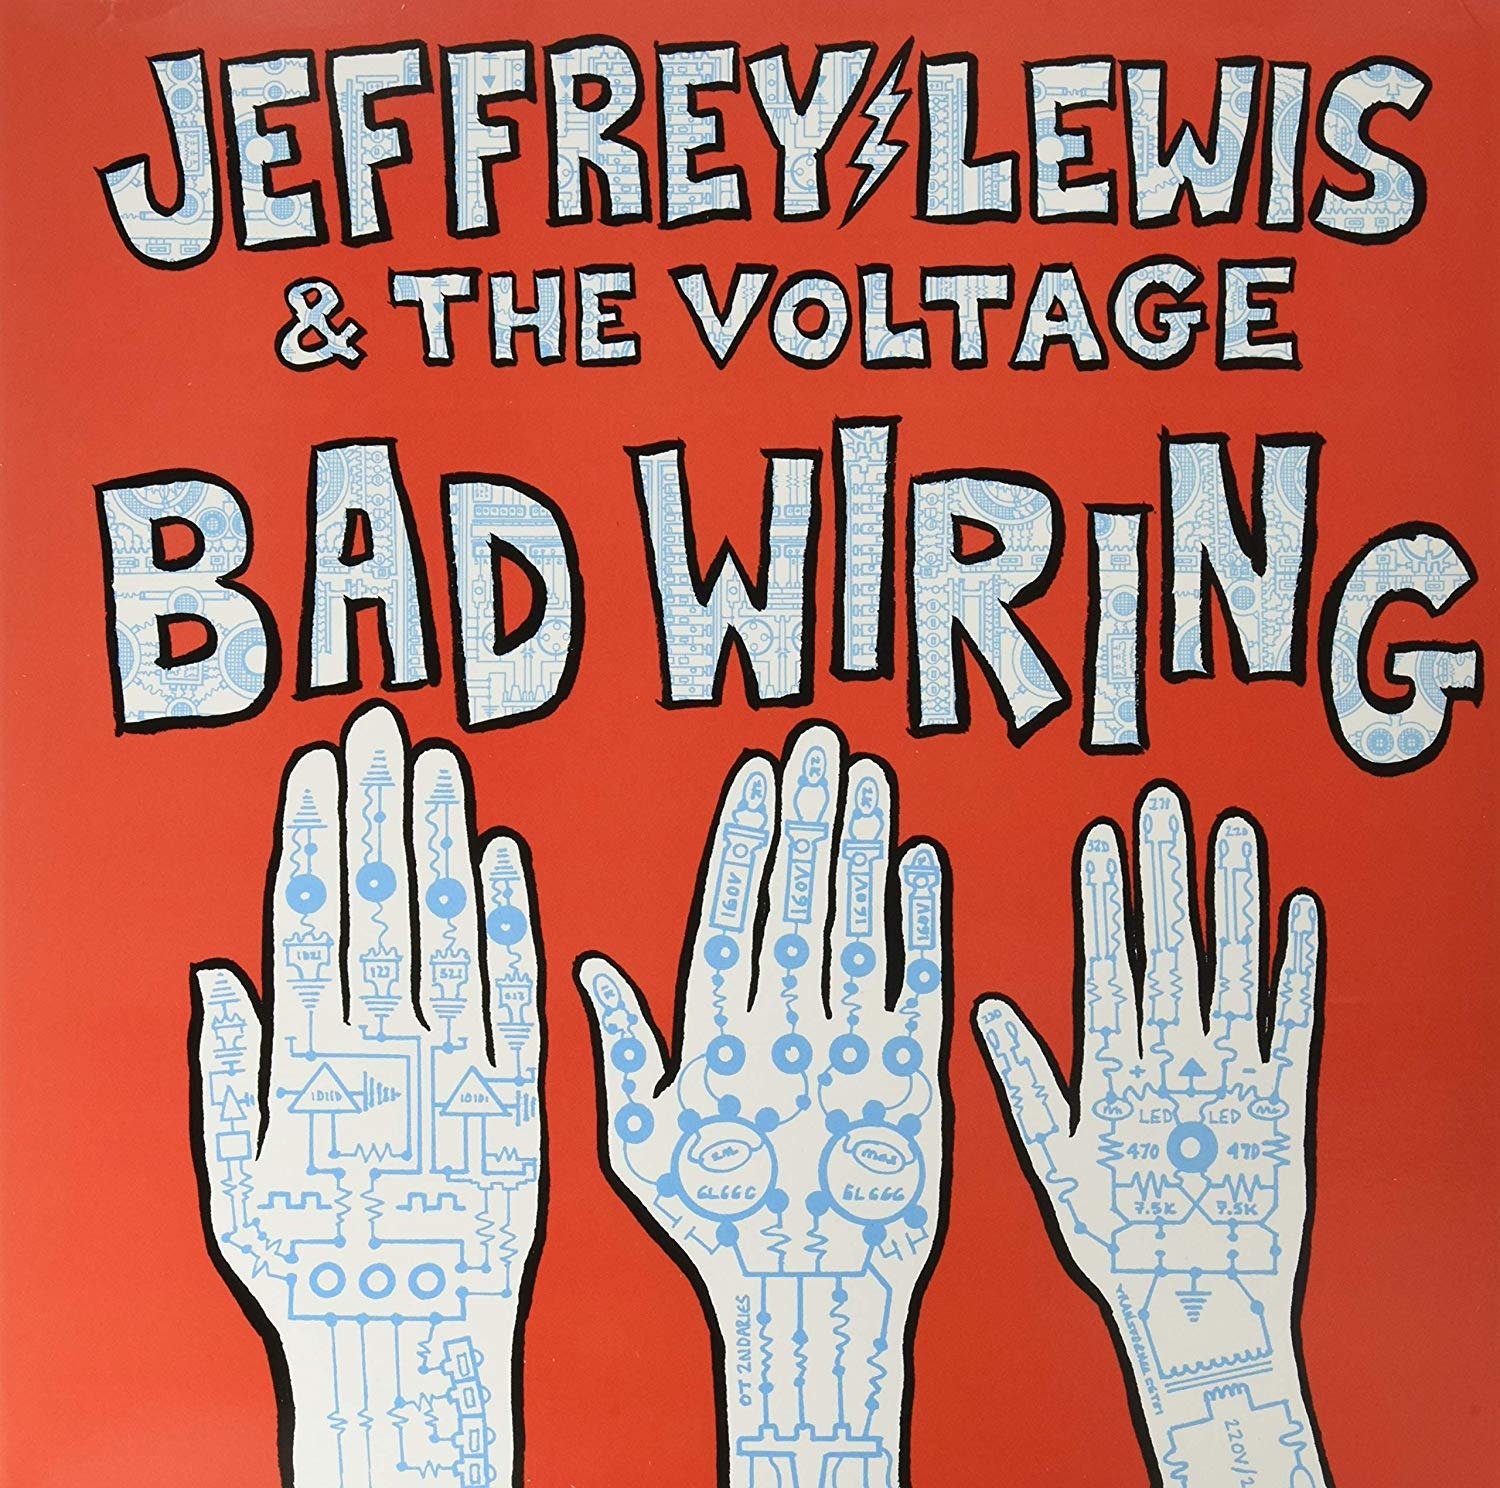 CD Shop - LEWIS, JEFFREY & VOLTAGE BAD WIRING